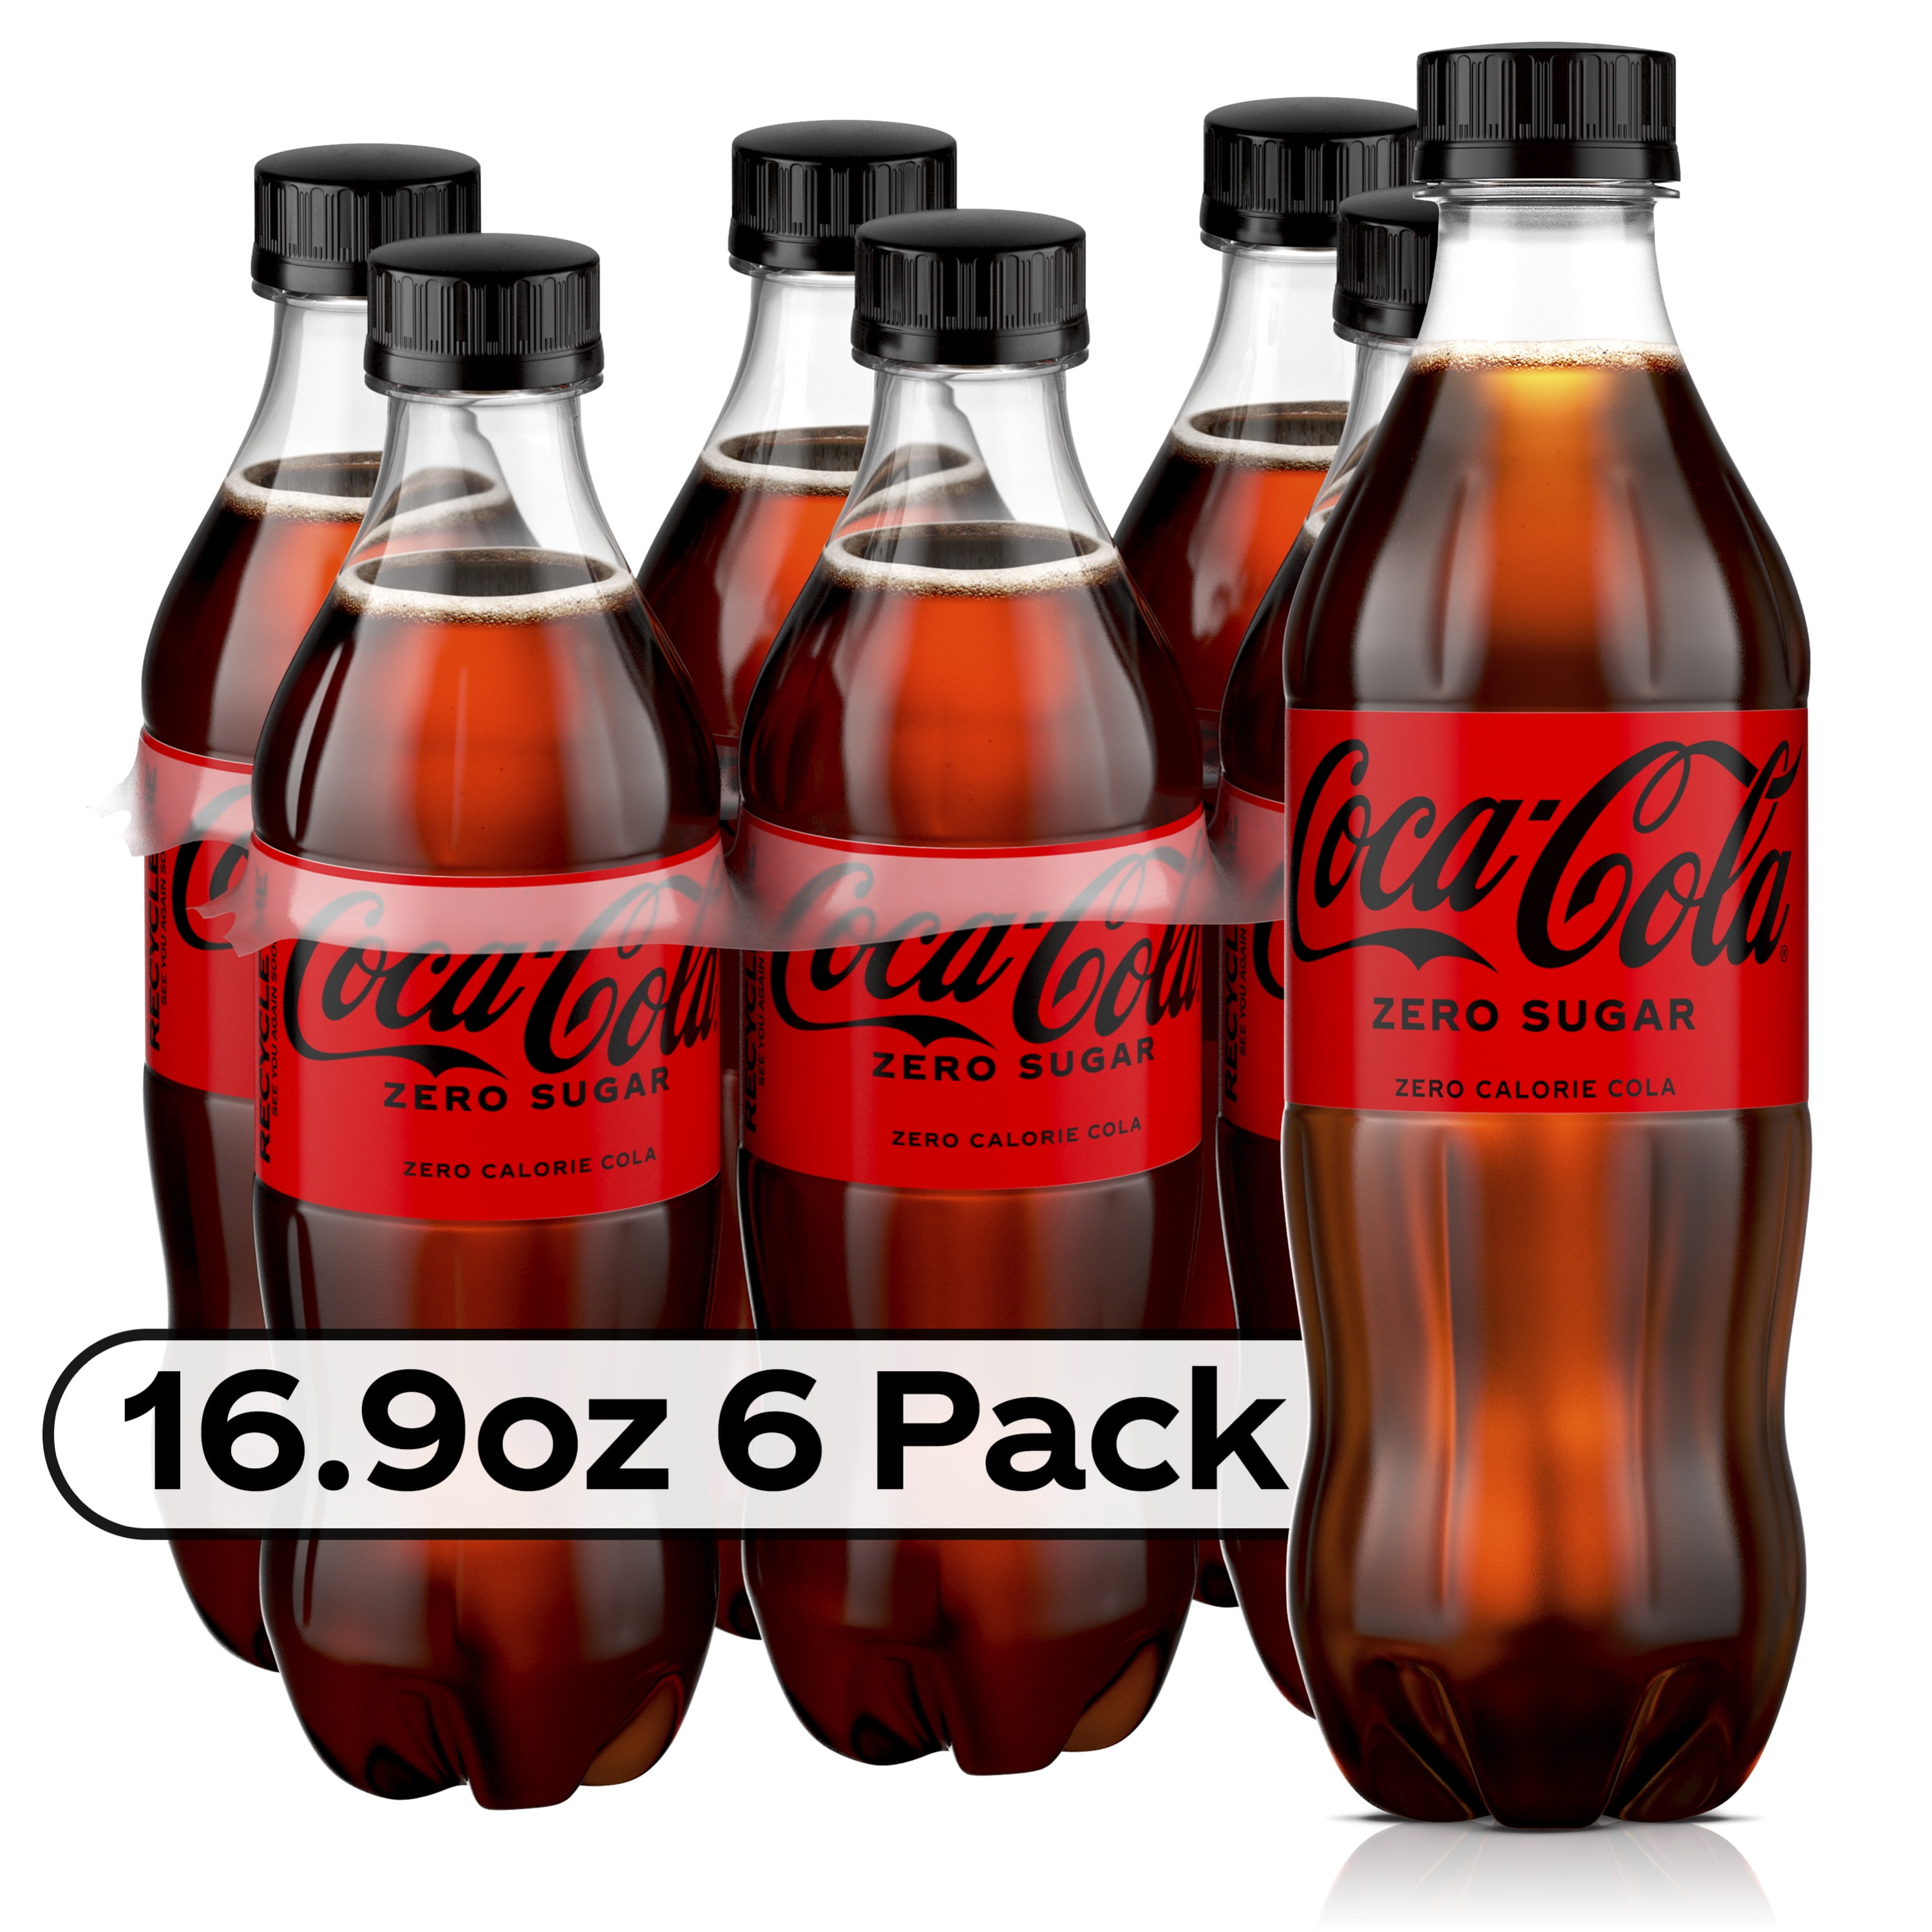 Coca-Cola Soda, Zero Calorie, Zero Sugar, 6 Pack - 6 pack, 16.9 fl oz